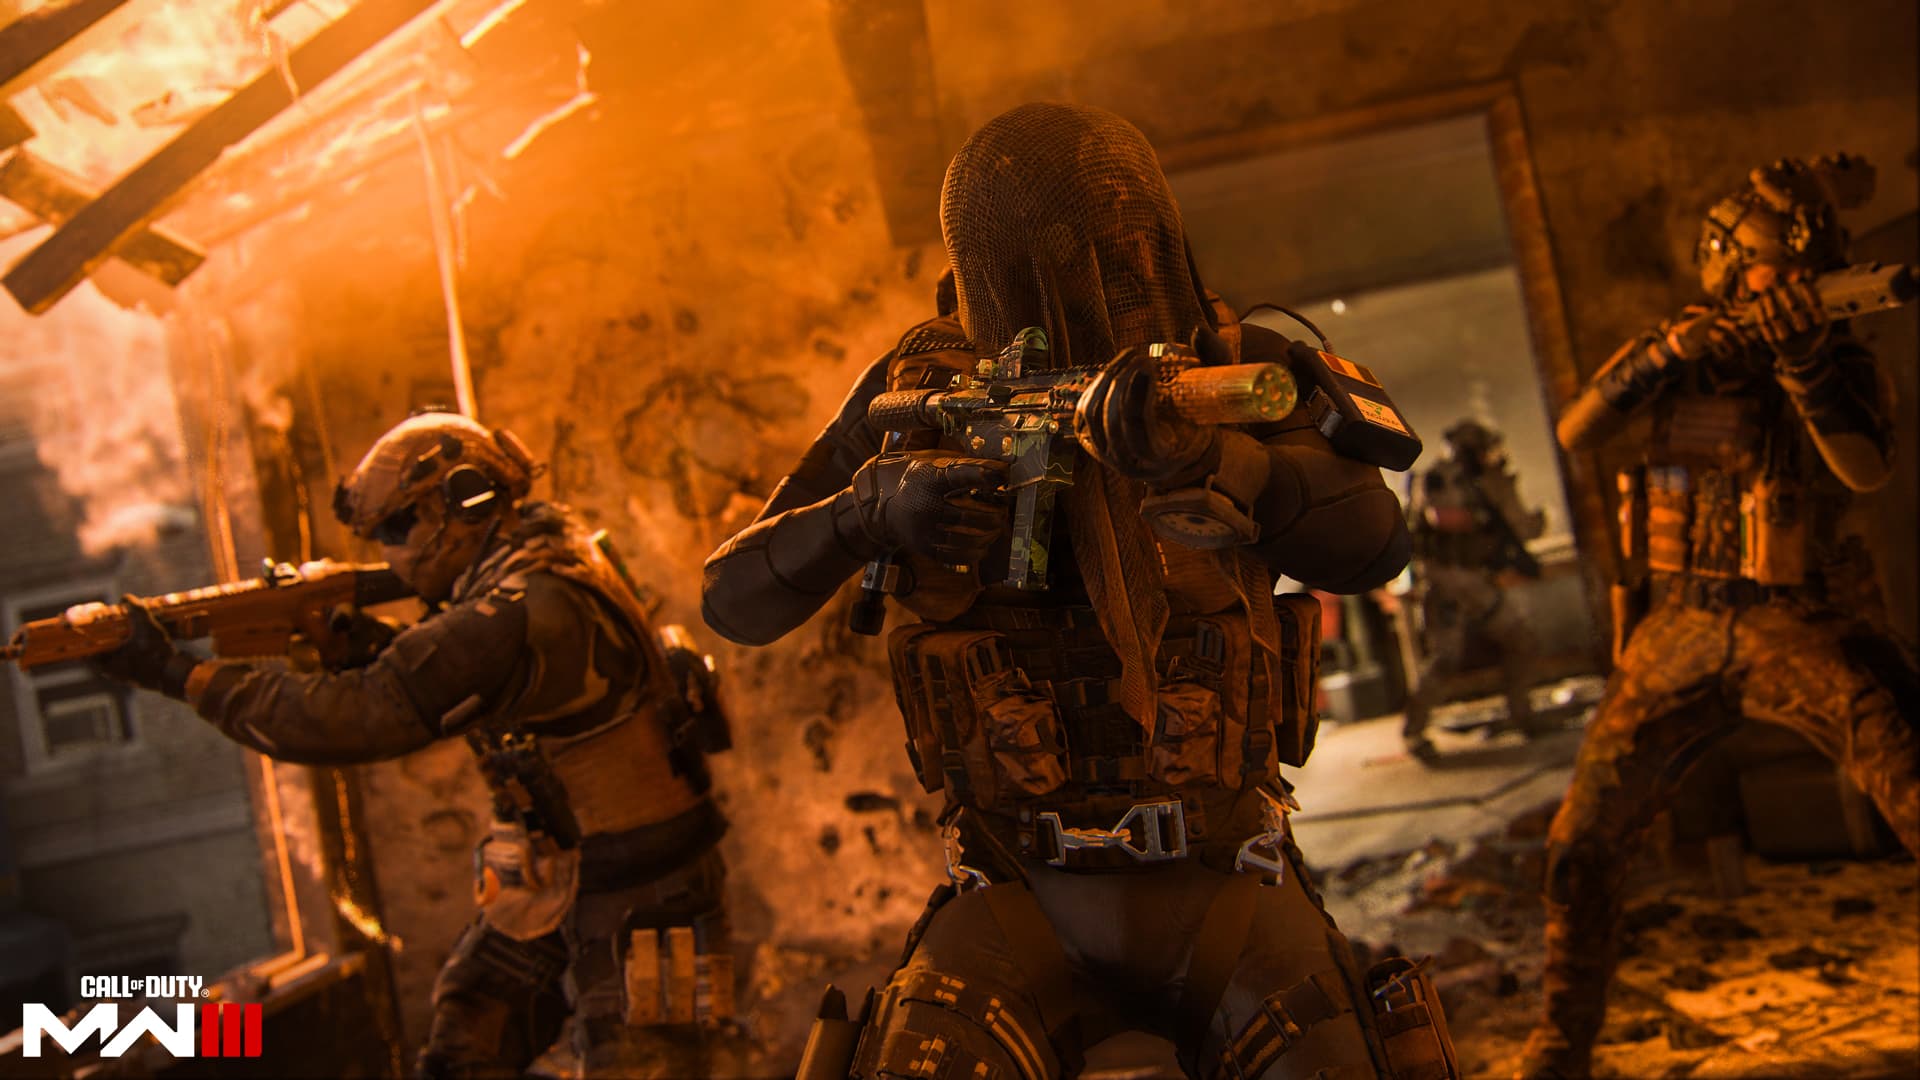 Call of Duty Modern Warfare 3 enters early access on November 2.